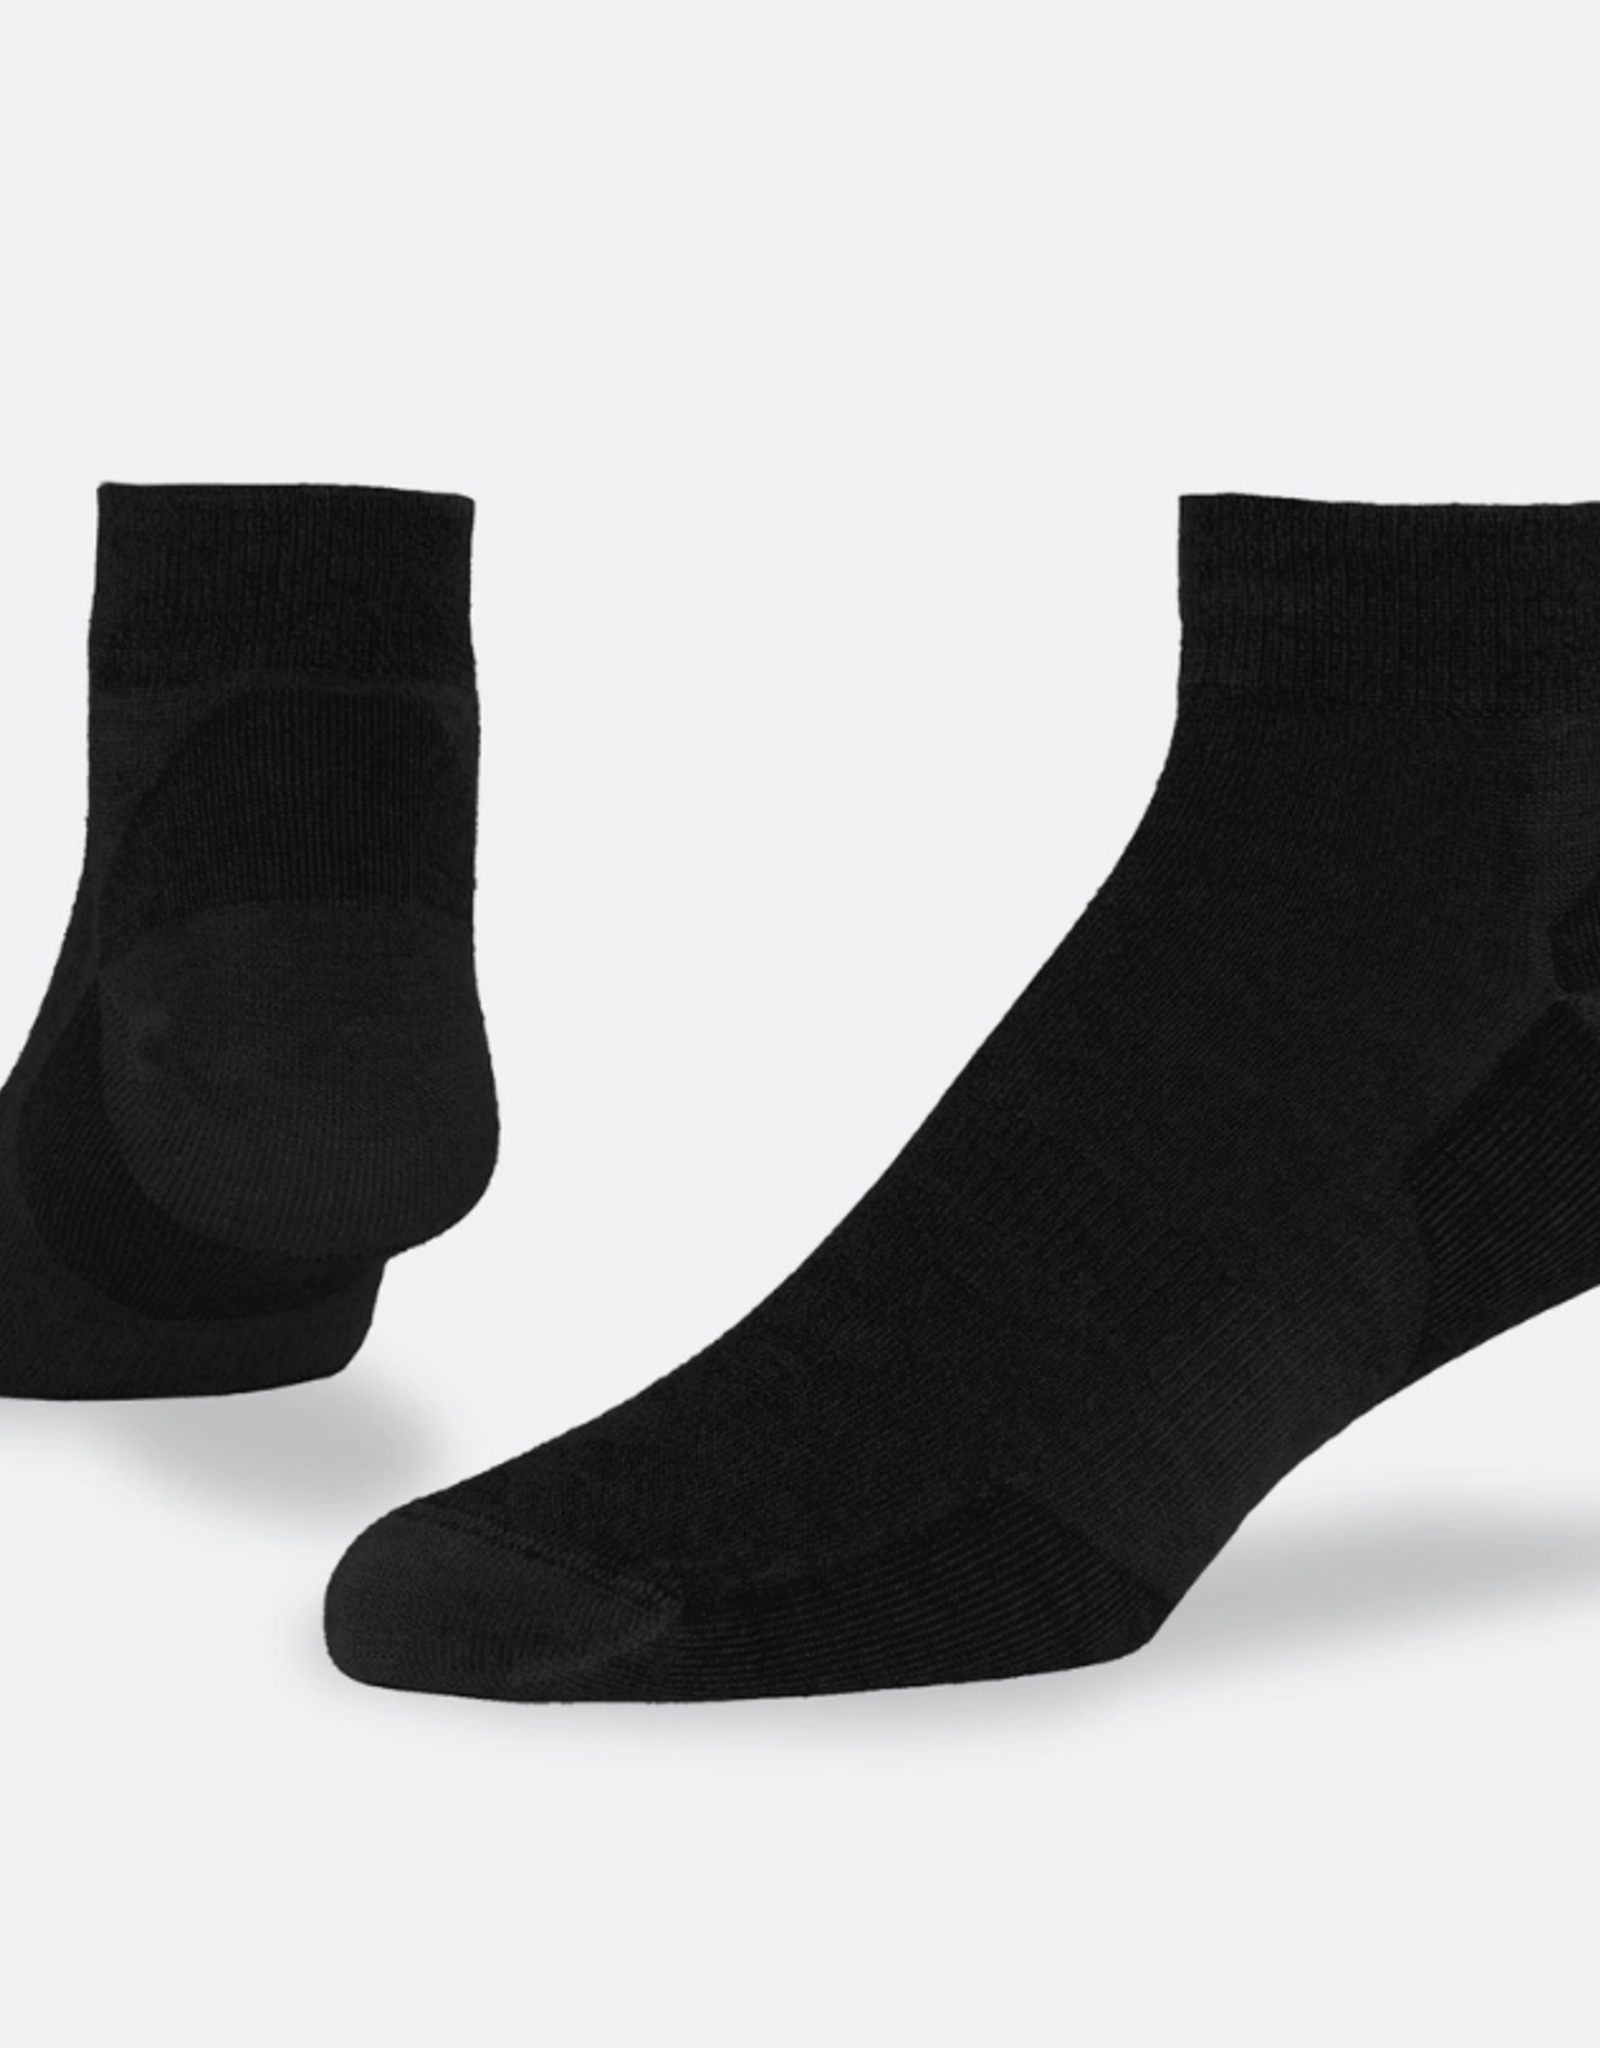 Maggie's Organics Urban Hiker Wool Ankle Socks - Black